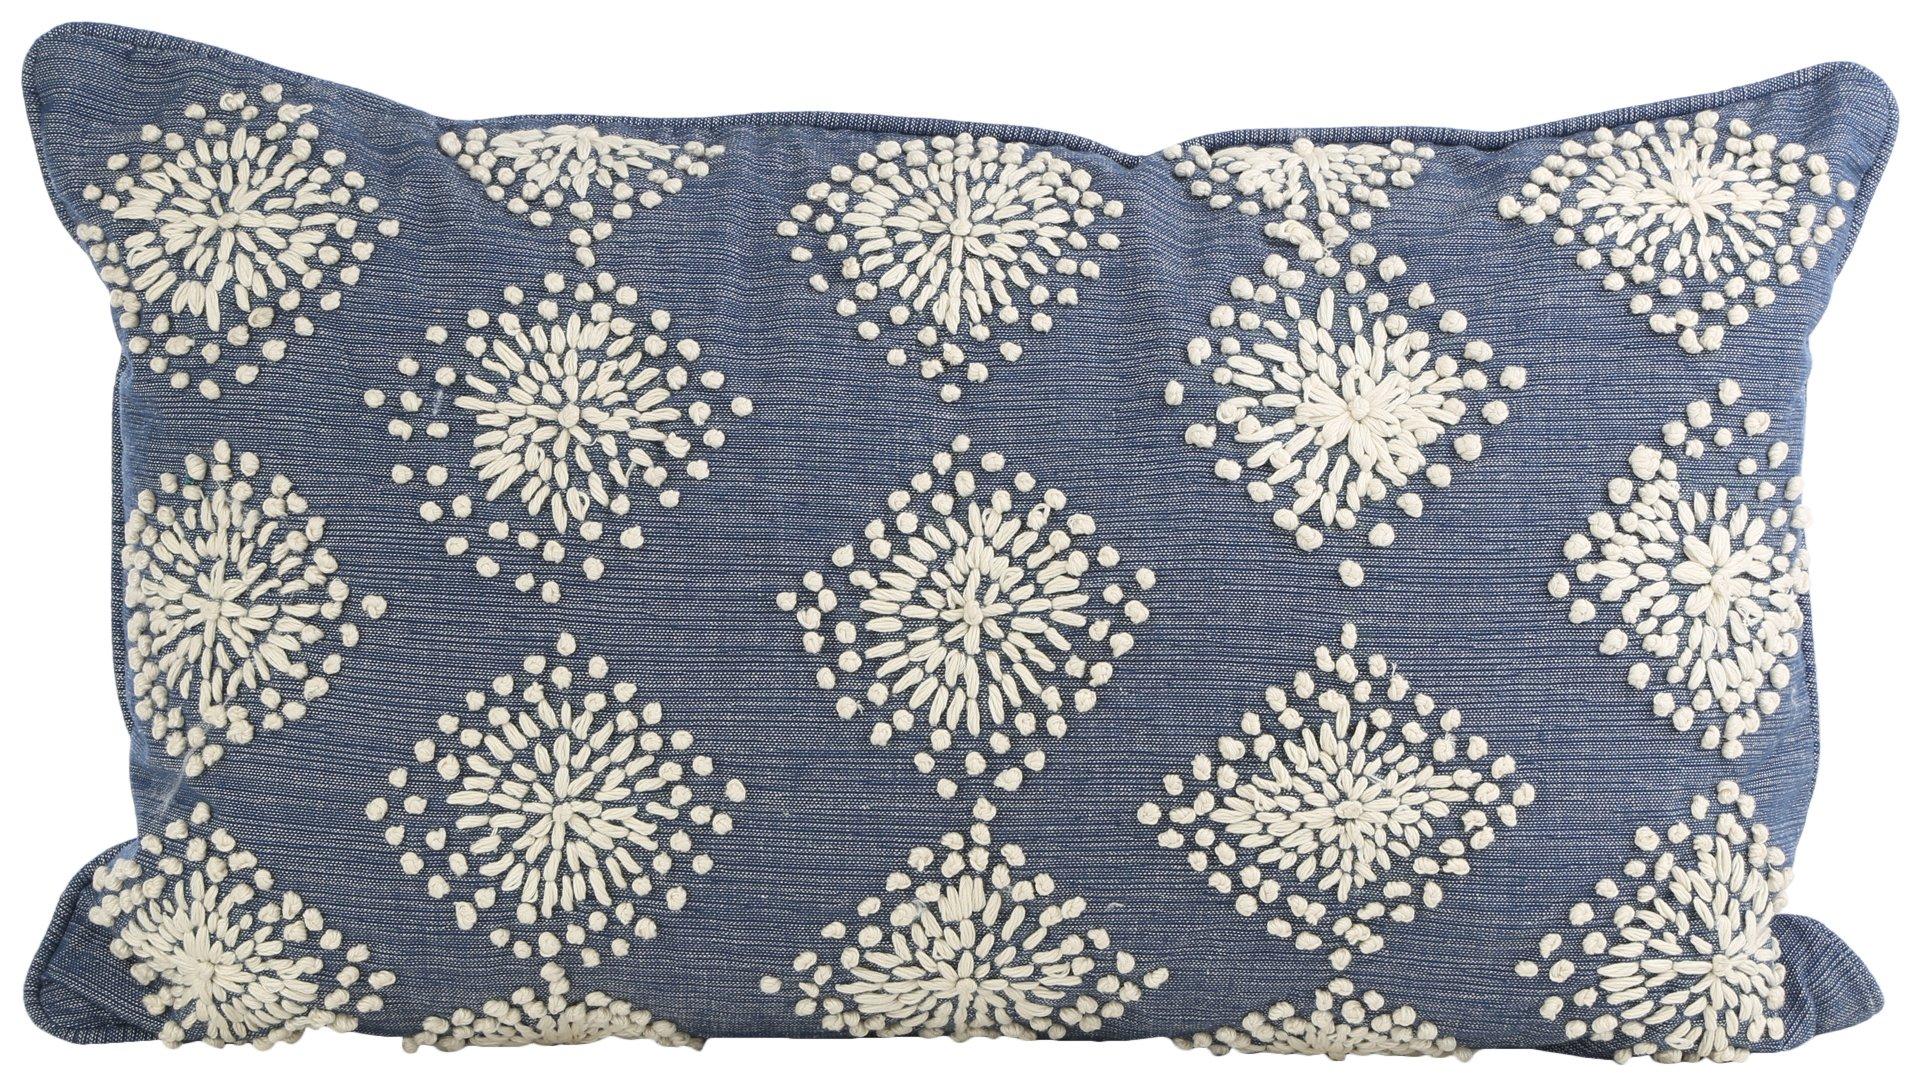 14x24 Kenia Embroidered Decorative Pillow